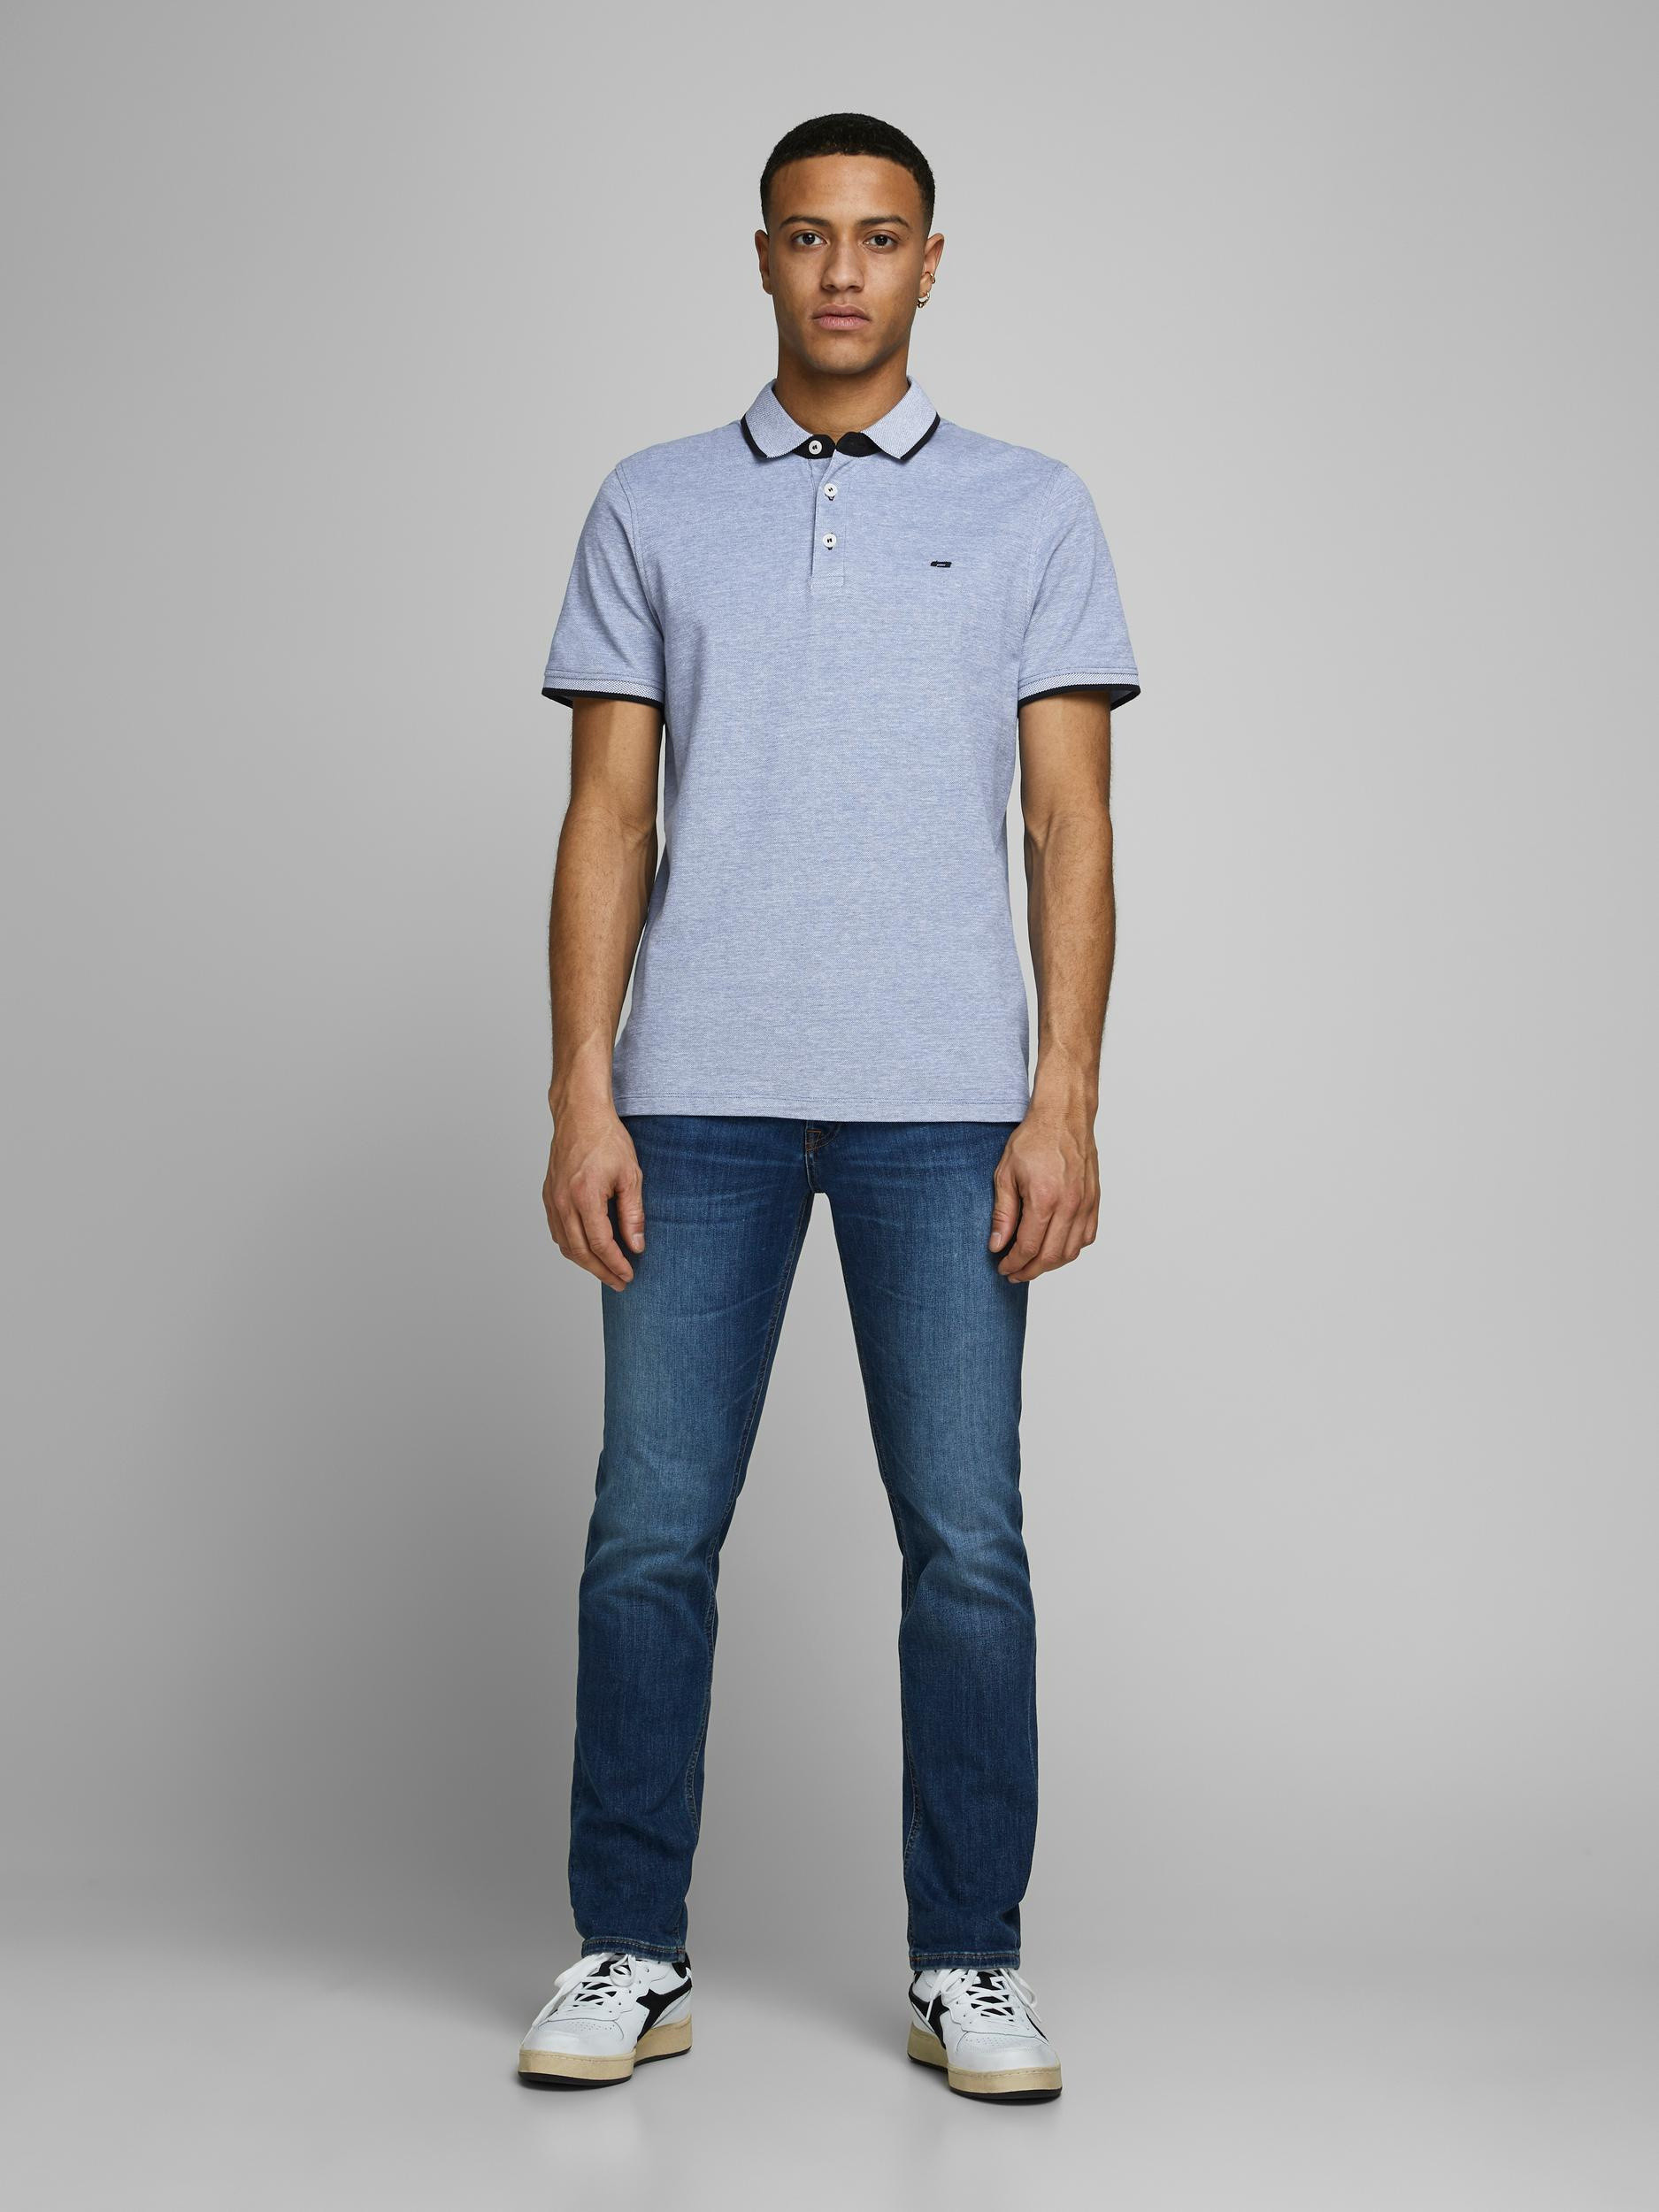 Jack & Jones - Slim fit polo shirt in cotton, Light Blue, large image number 1